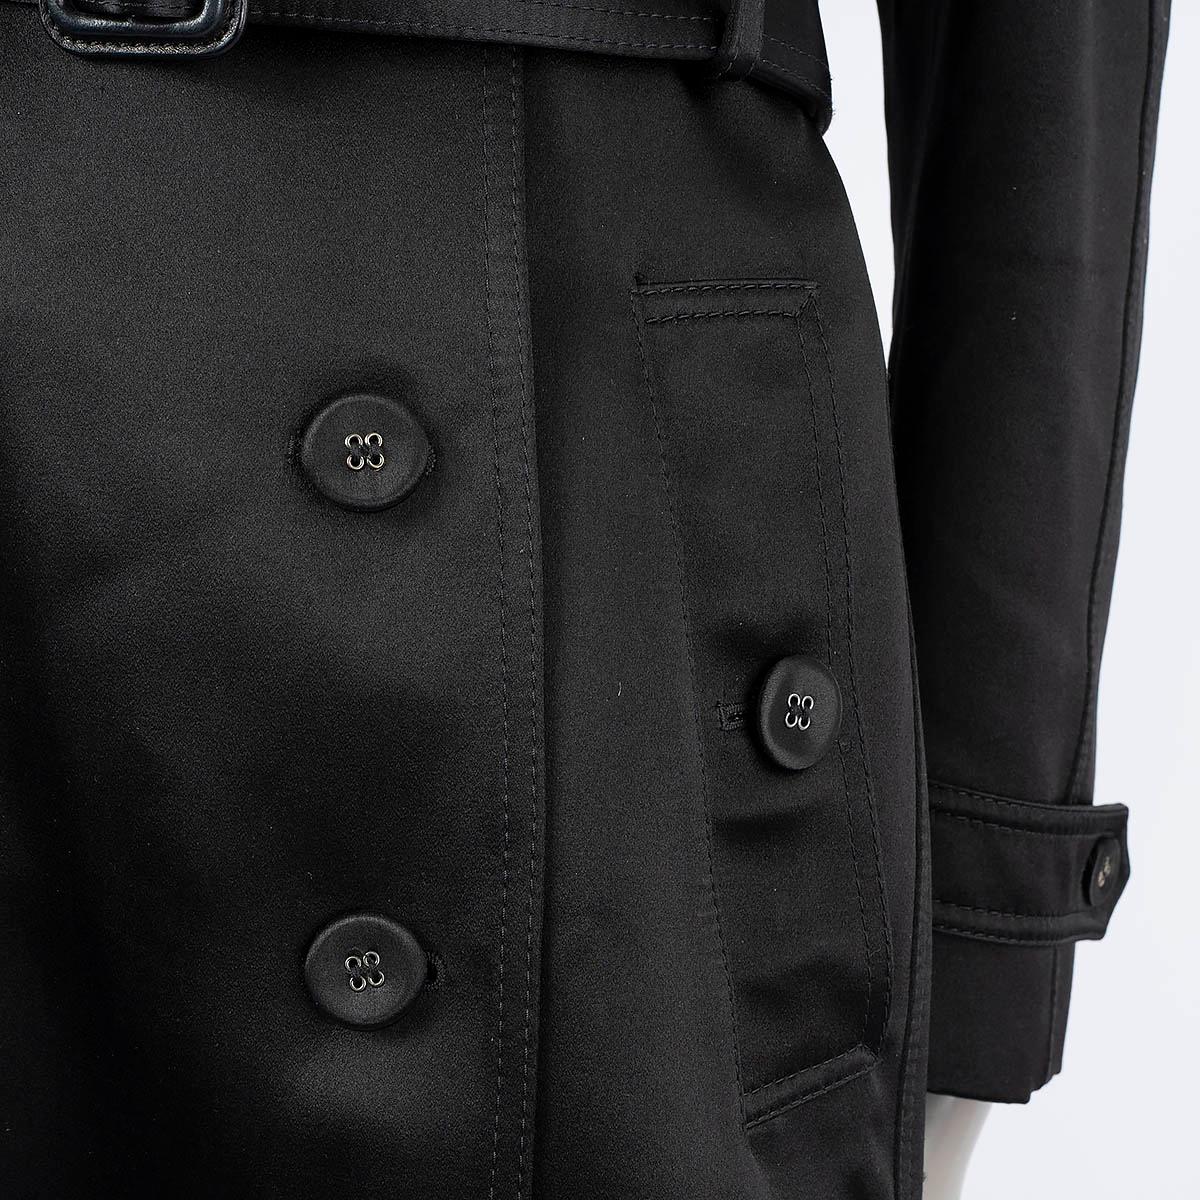 BURBERRY PRORSUM black 2013 DOUBLE DUCHESSE CAPED TRENCH Coat Jacket 42 M For Sale 3